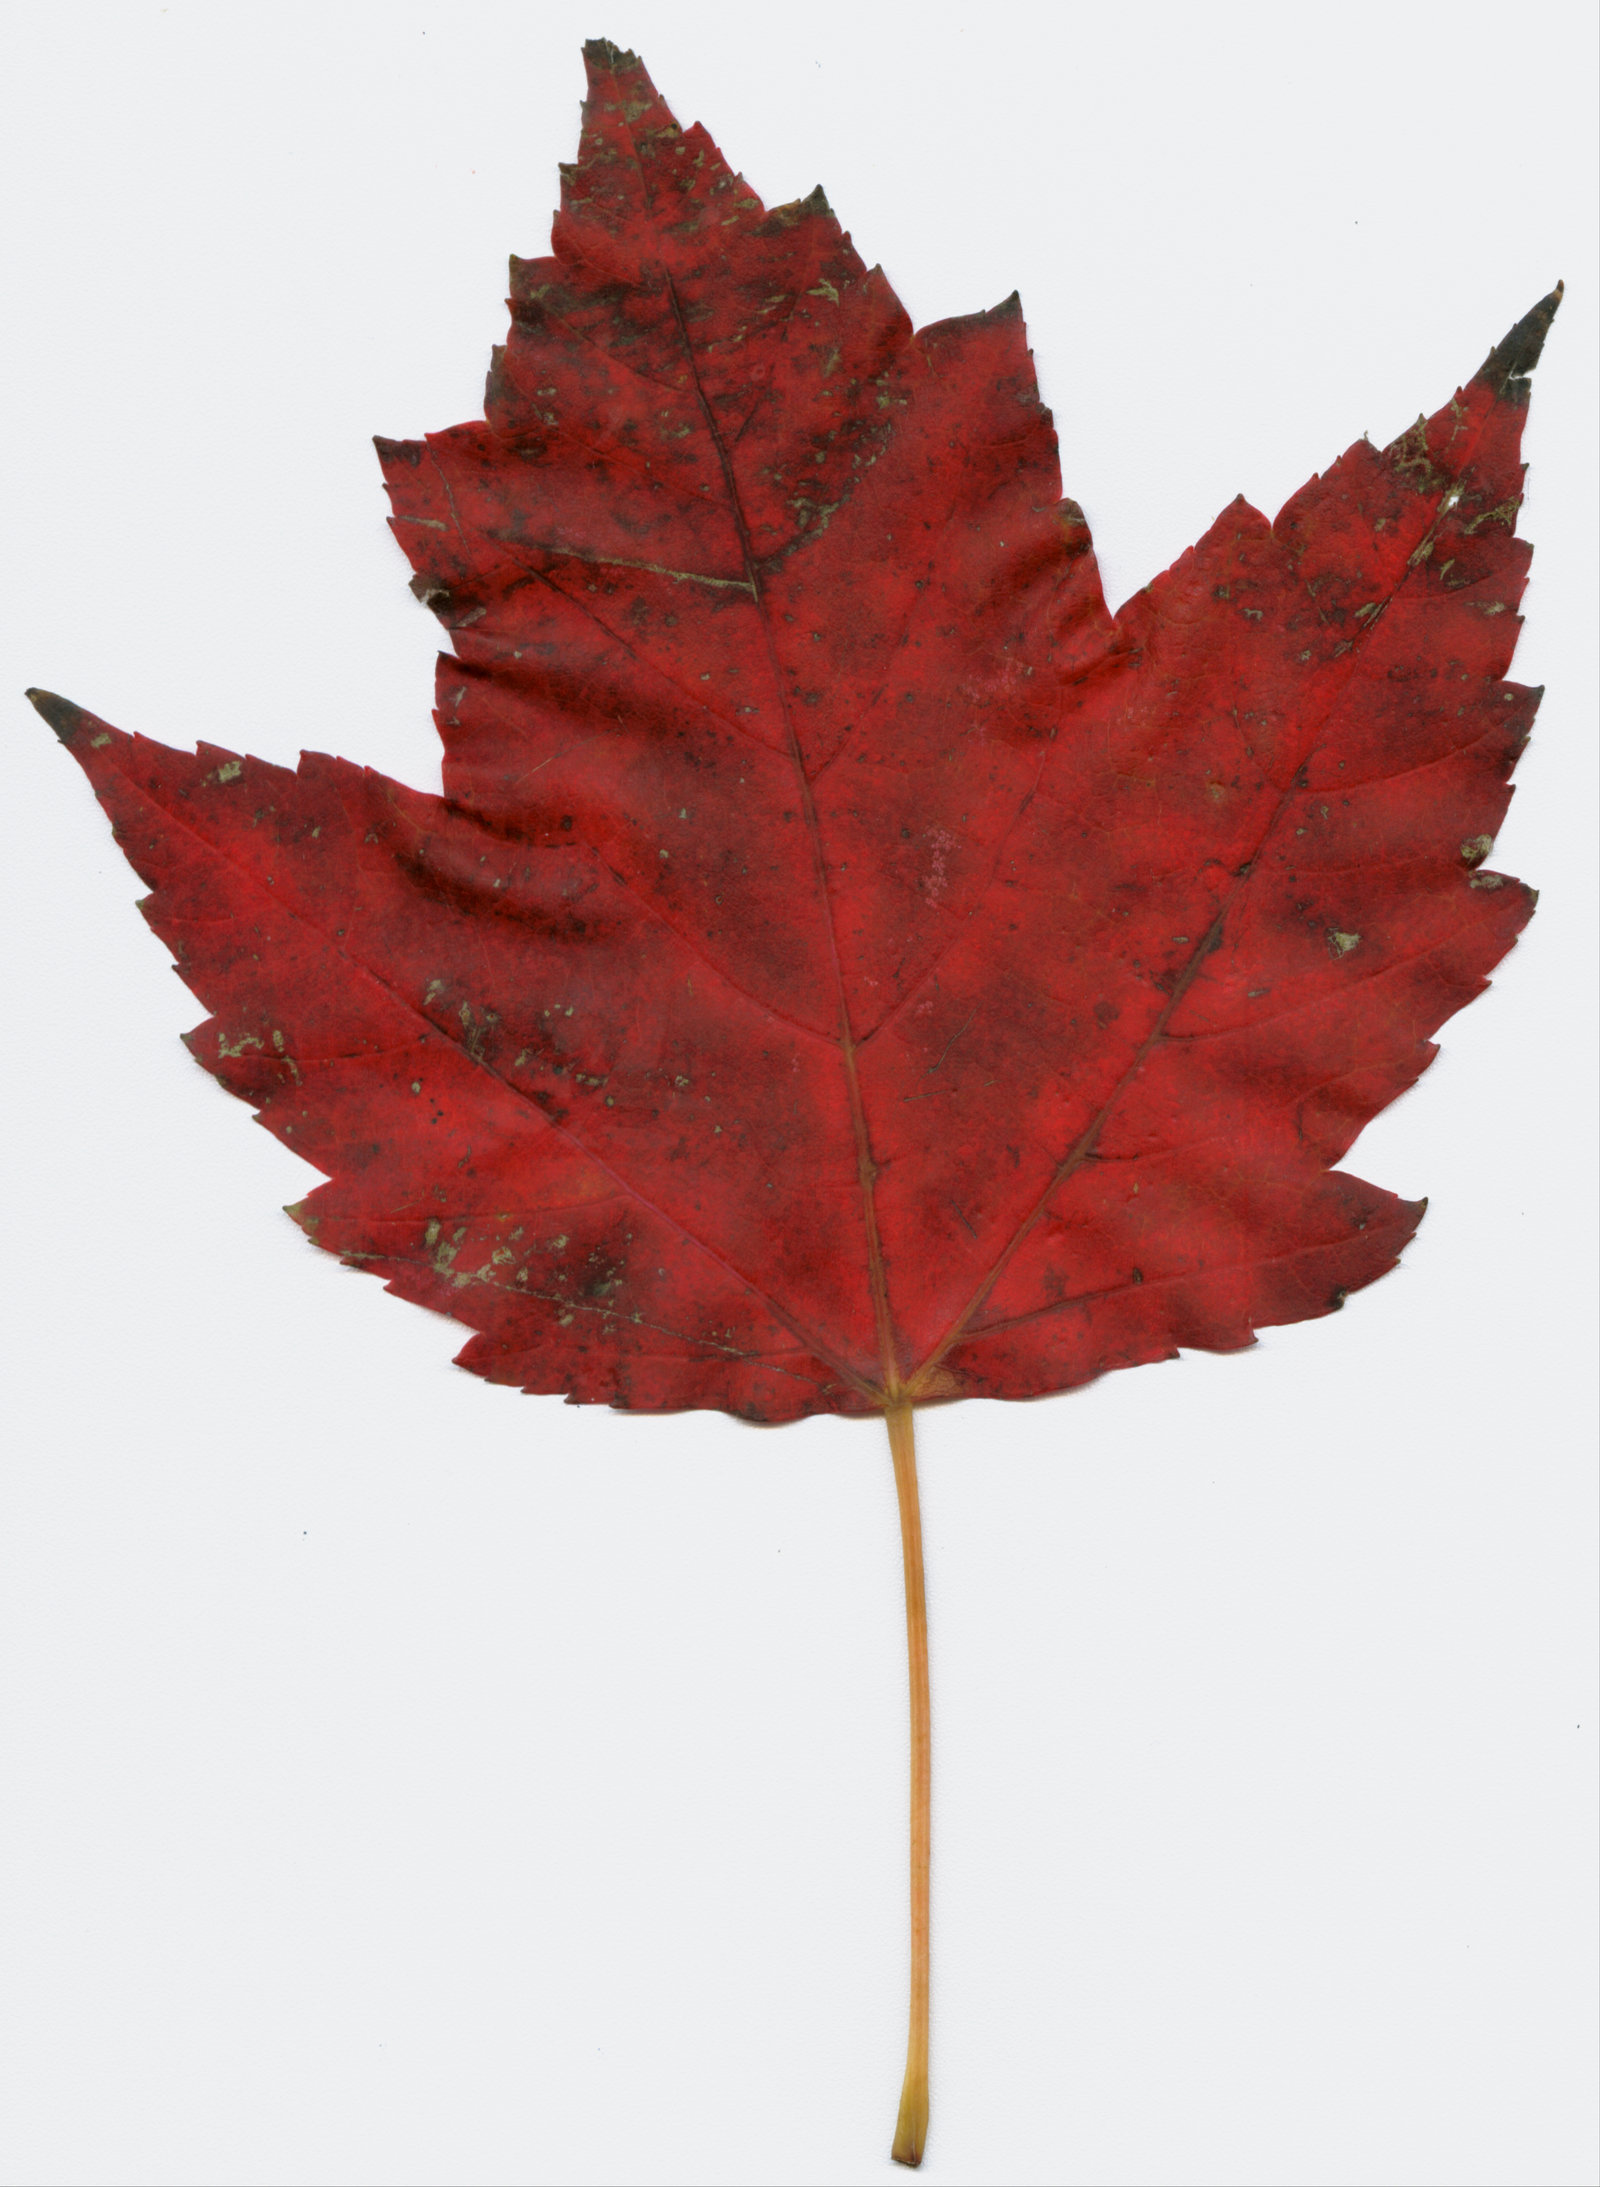 bright red maple leaf by tash11-stock on DeviantArt